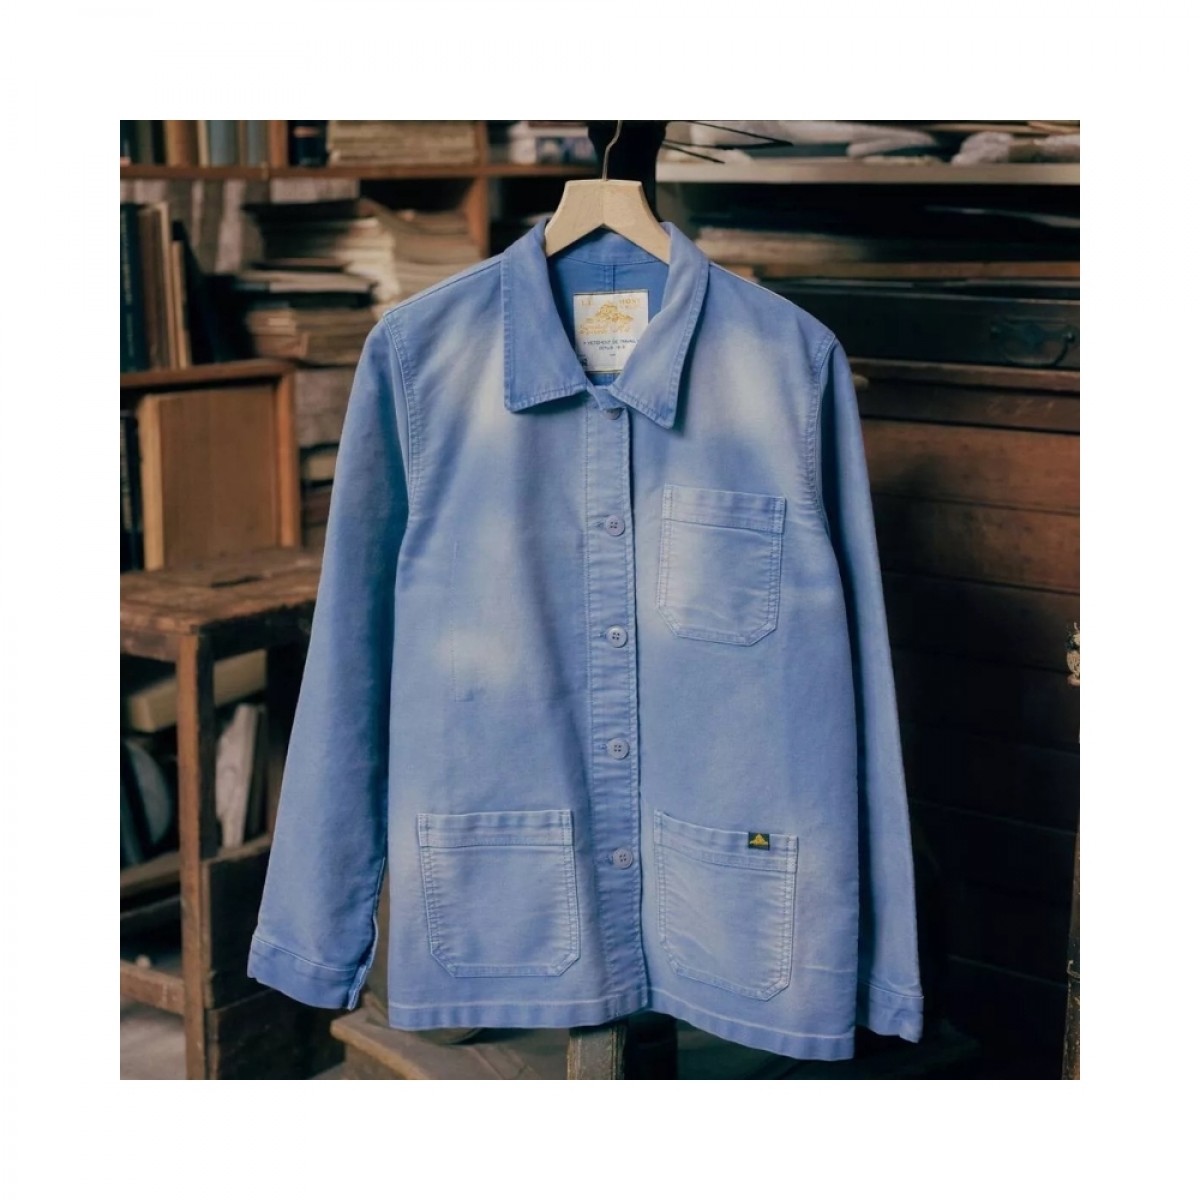 genuine work jacket - blue - front 1